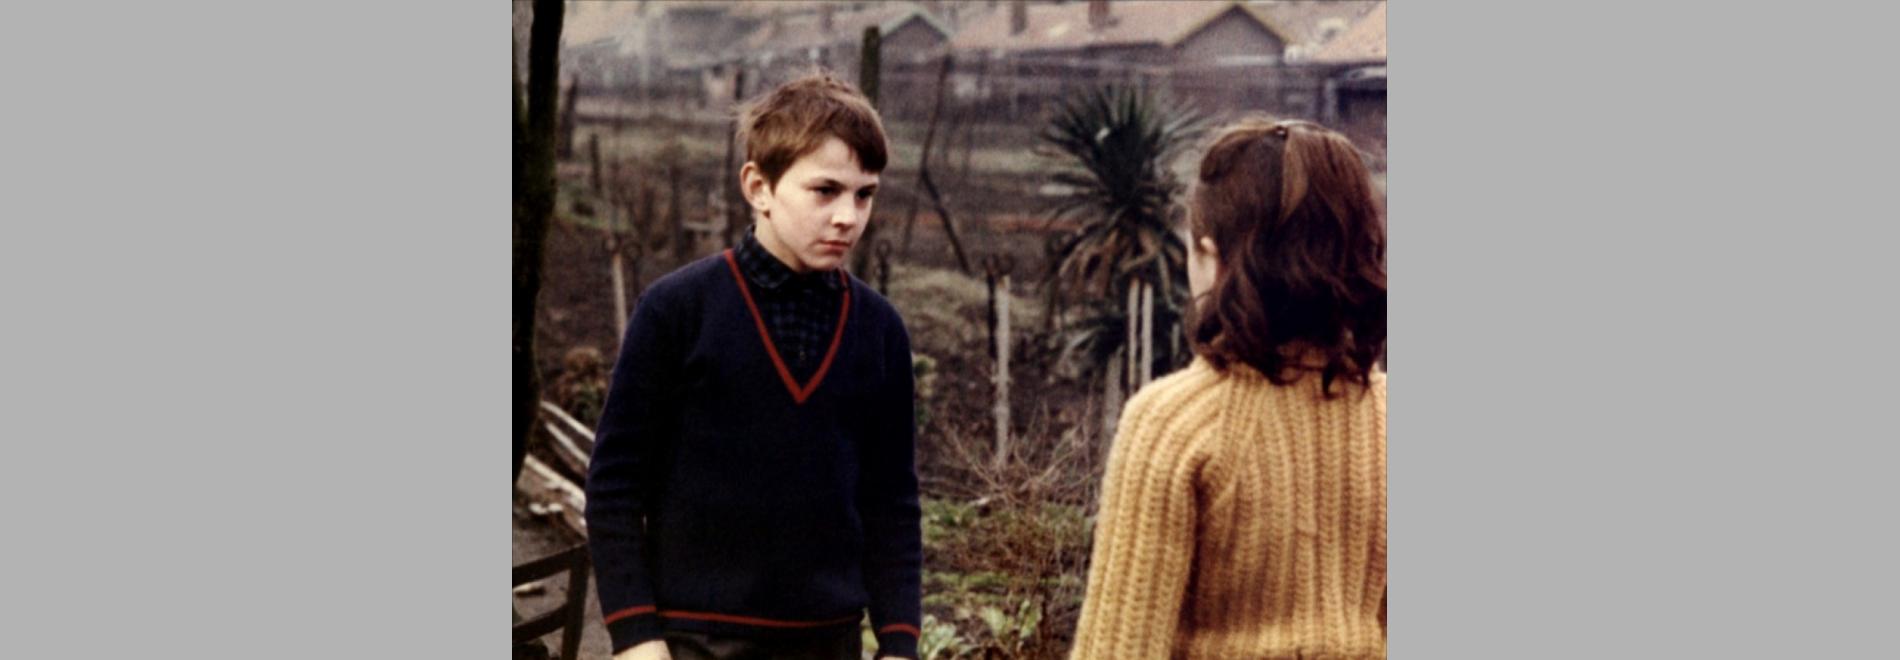 L'enfance nue (Maurice Pialat, 1969)